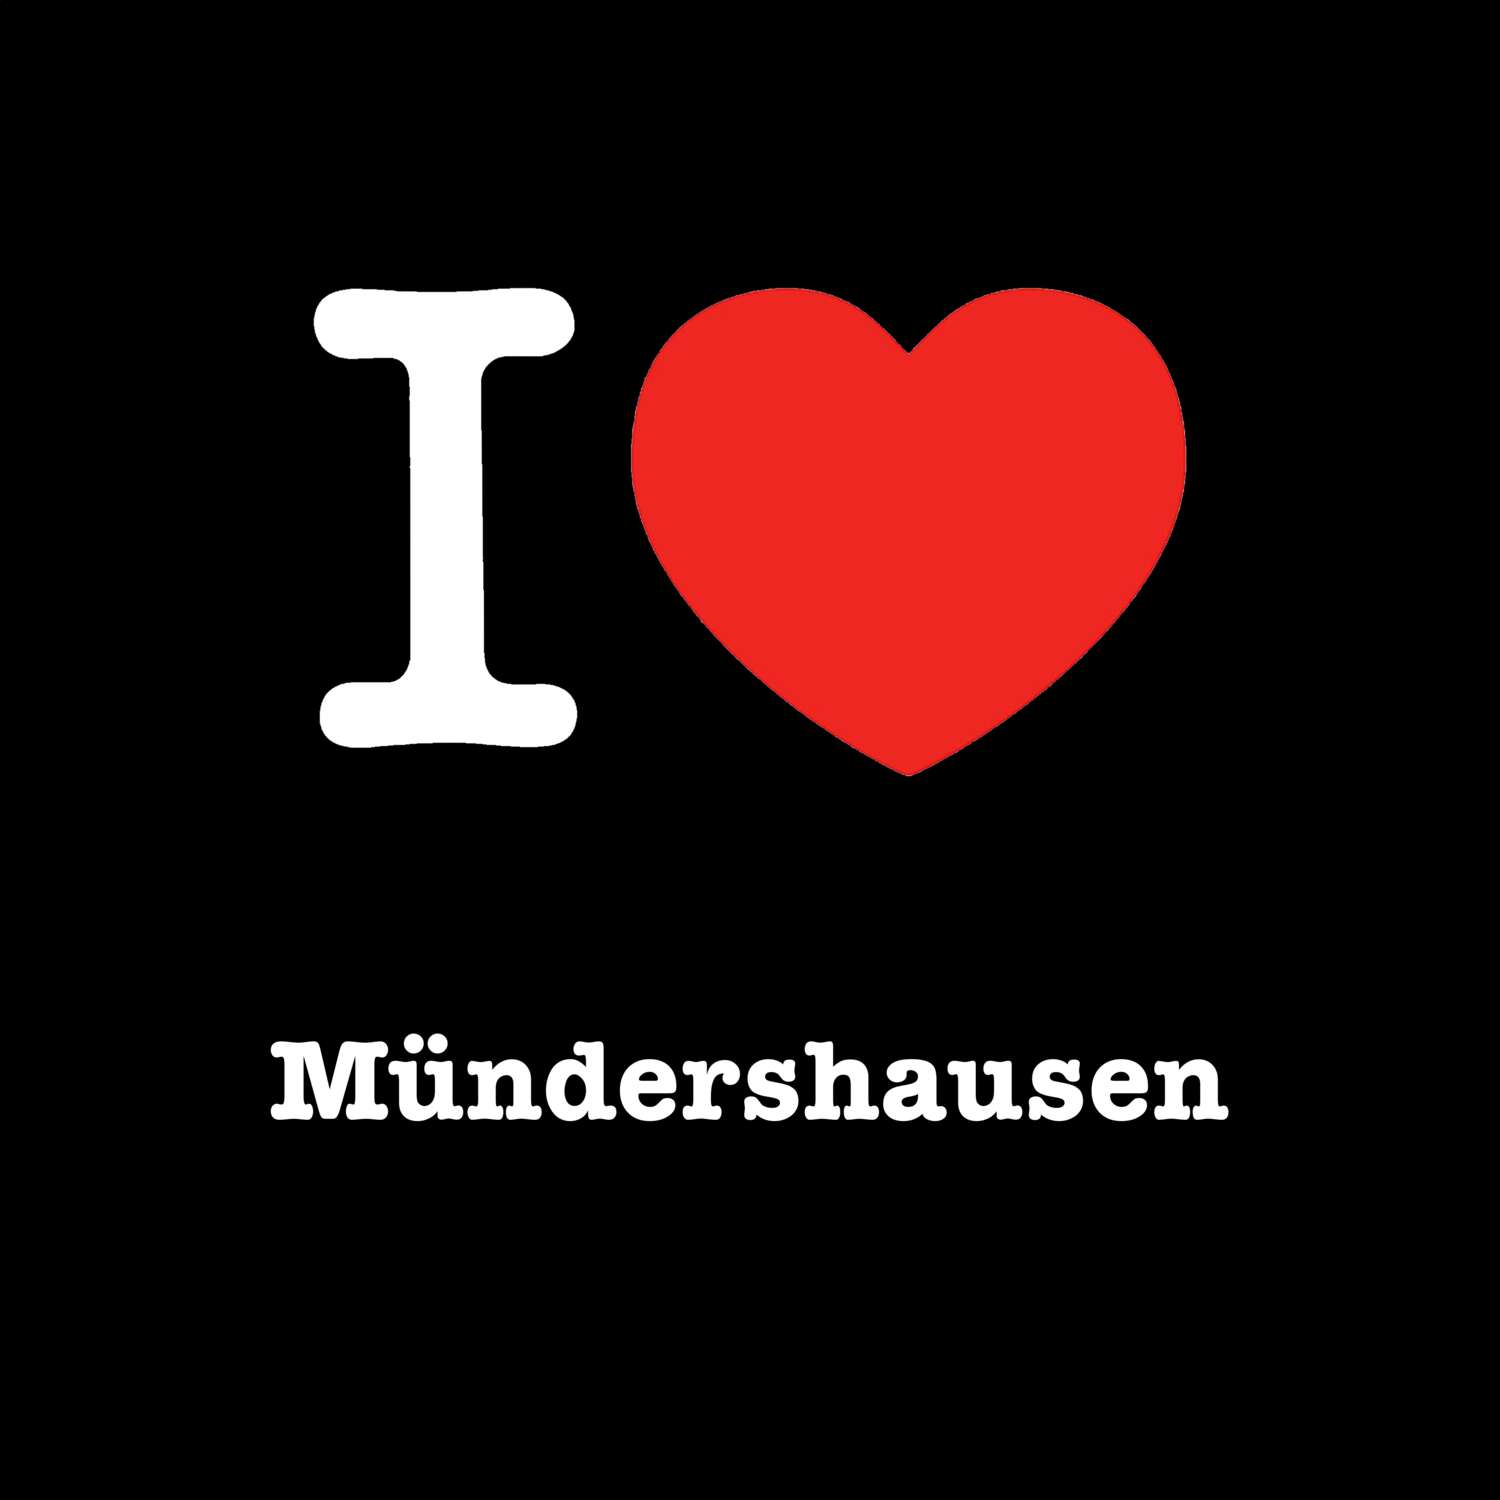 Mündershausen T-Shirt »I love«